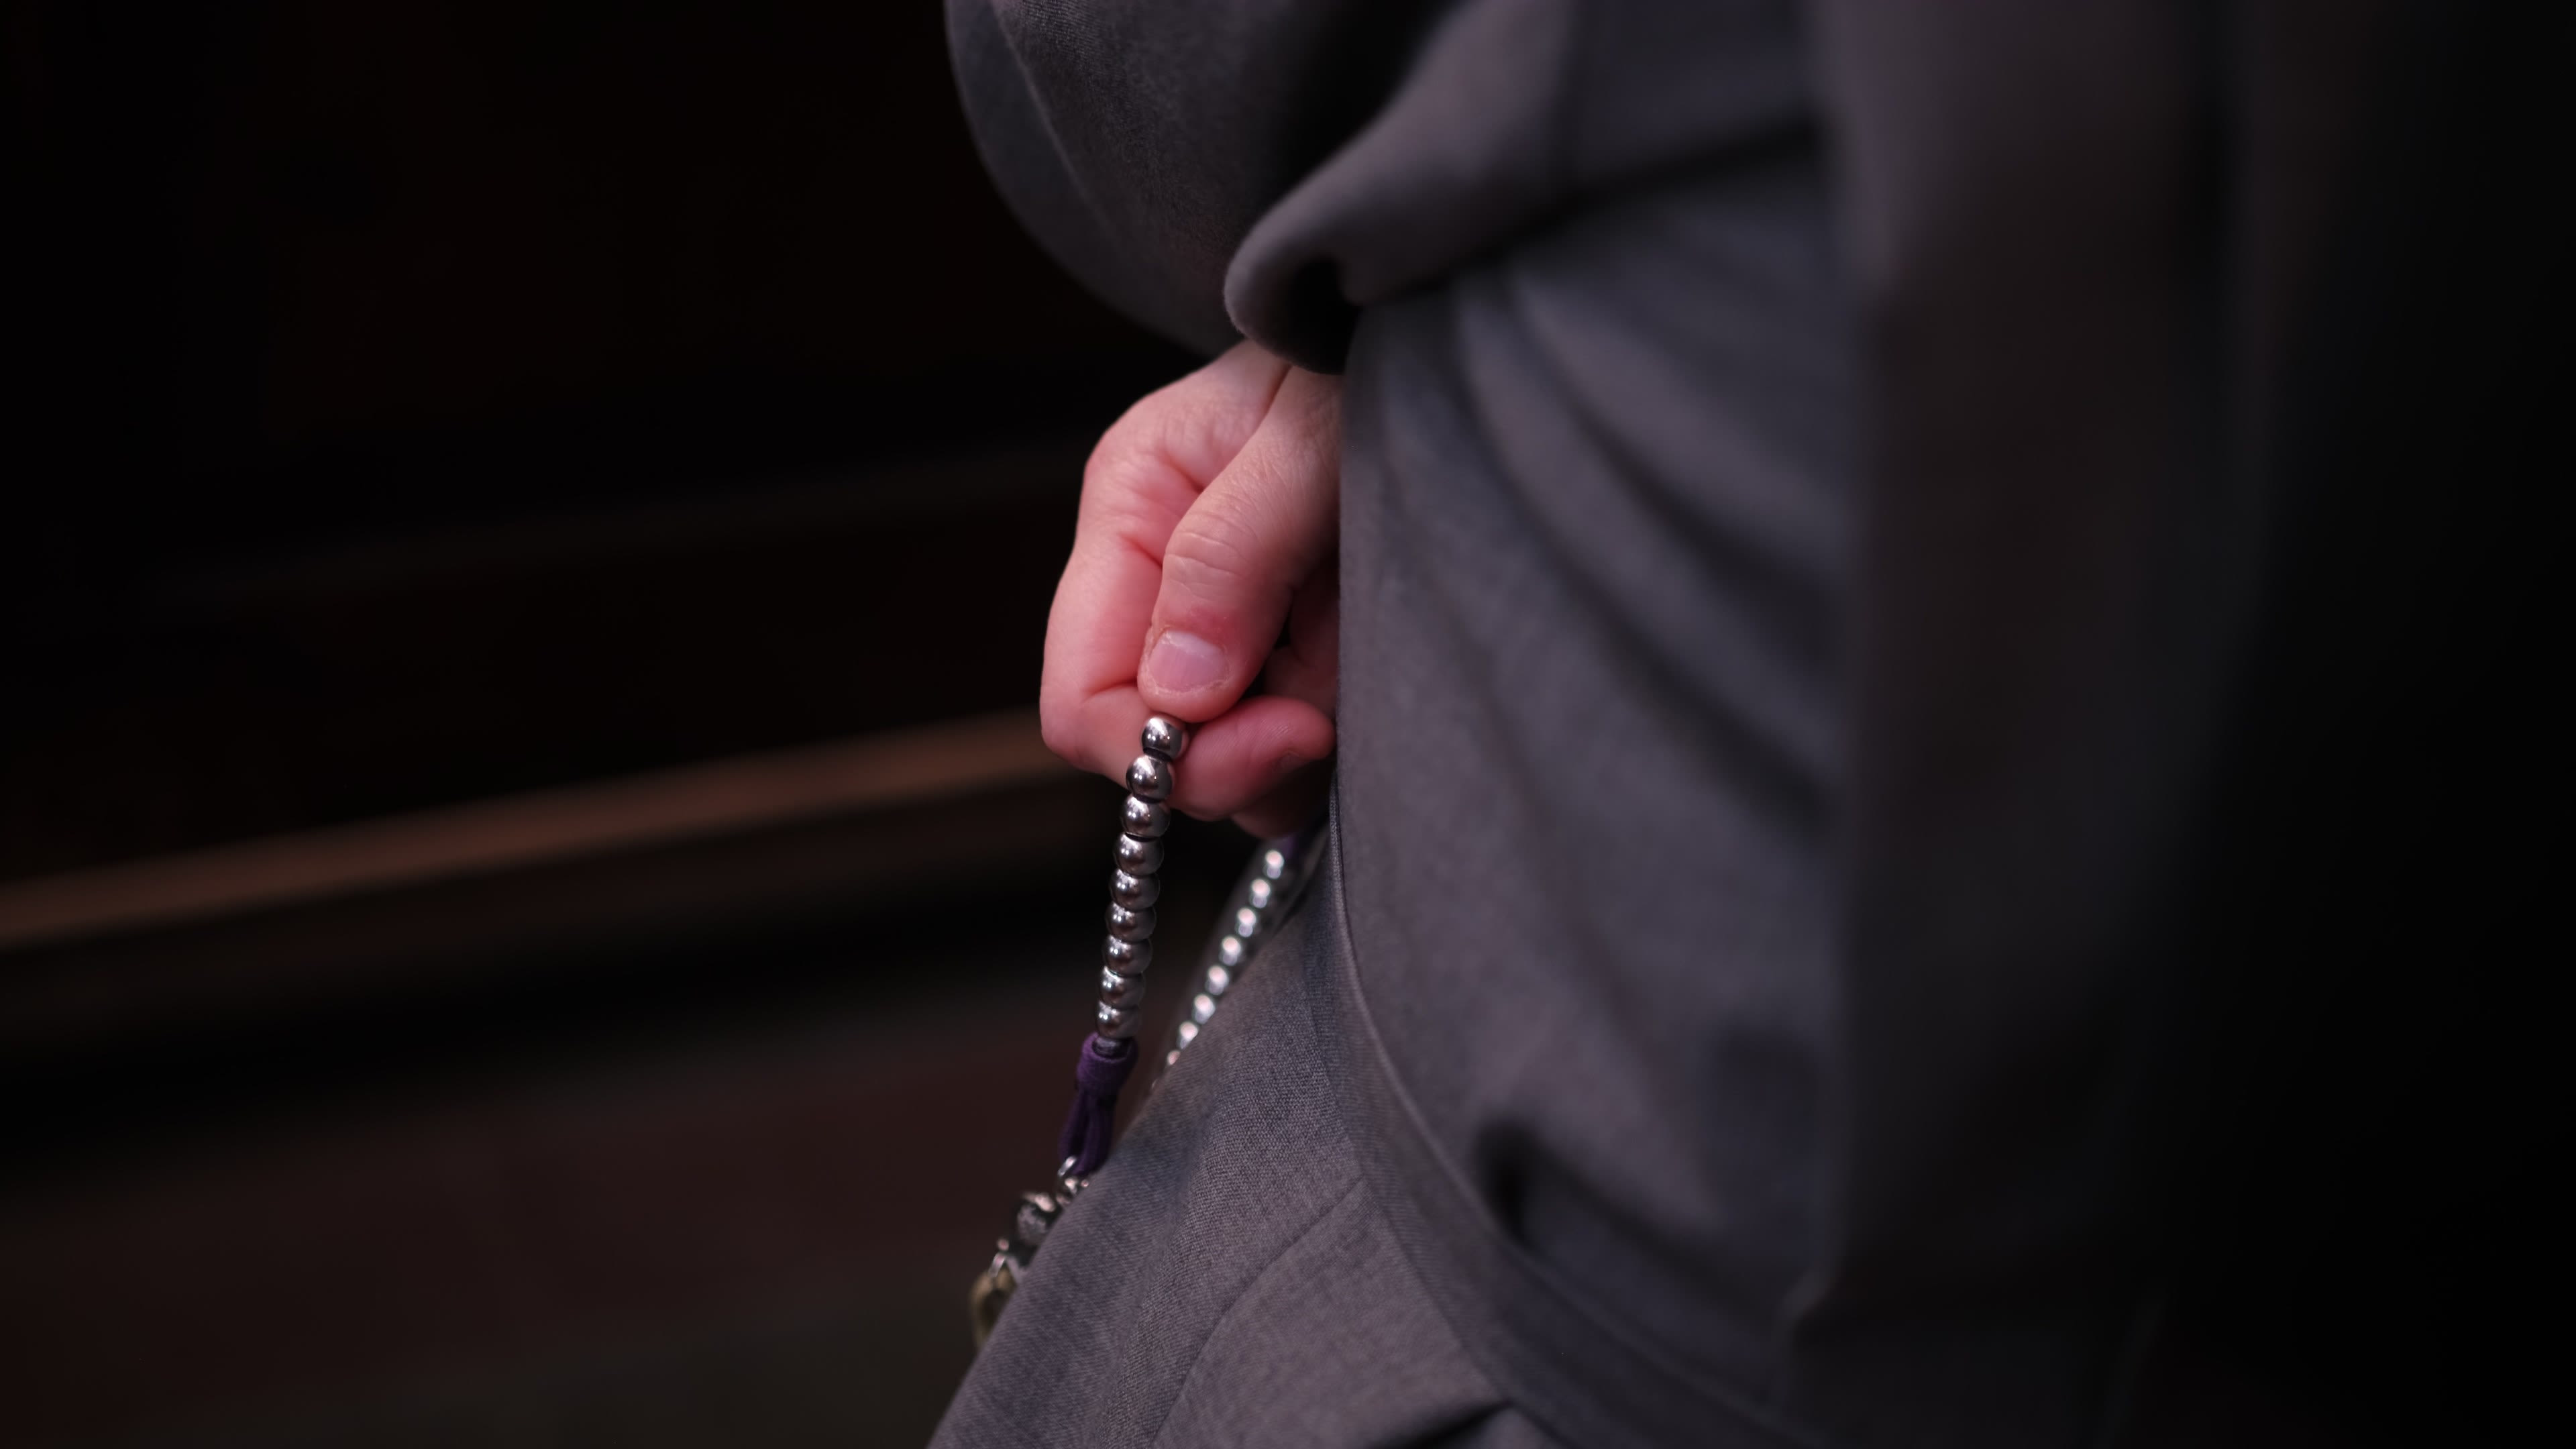 Texas nuns hit back at bishop, demand apology for 'abusive act'